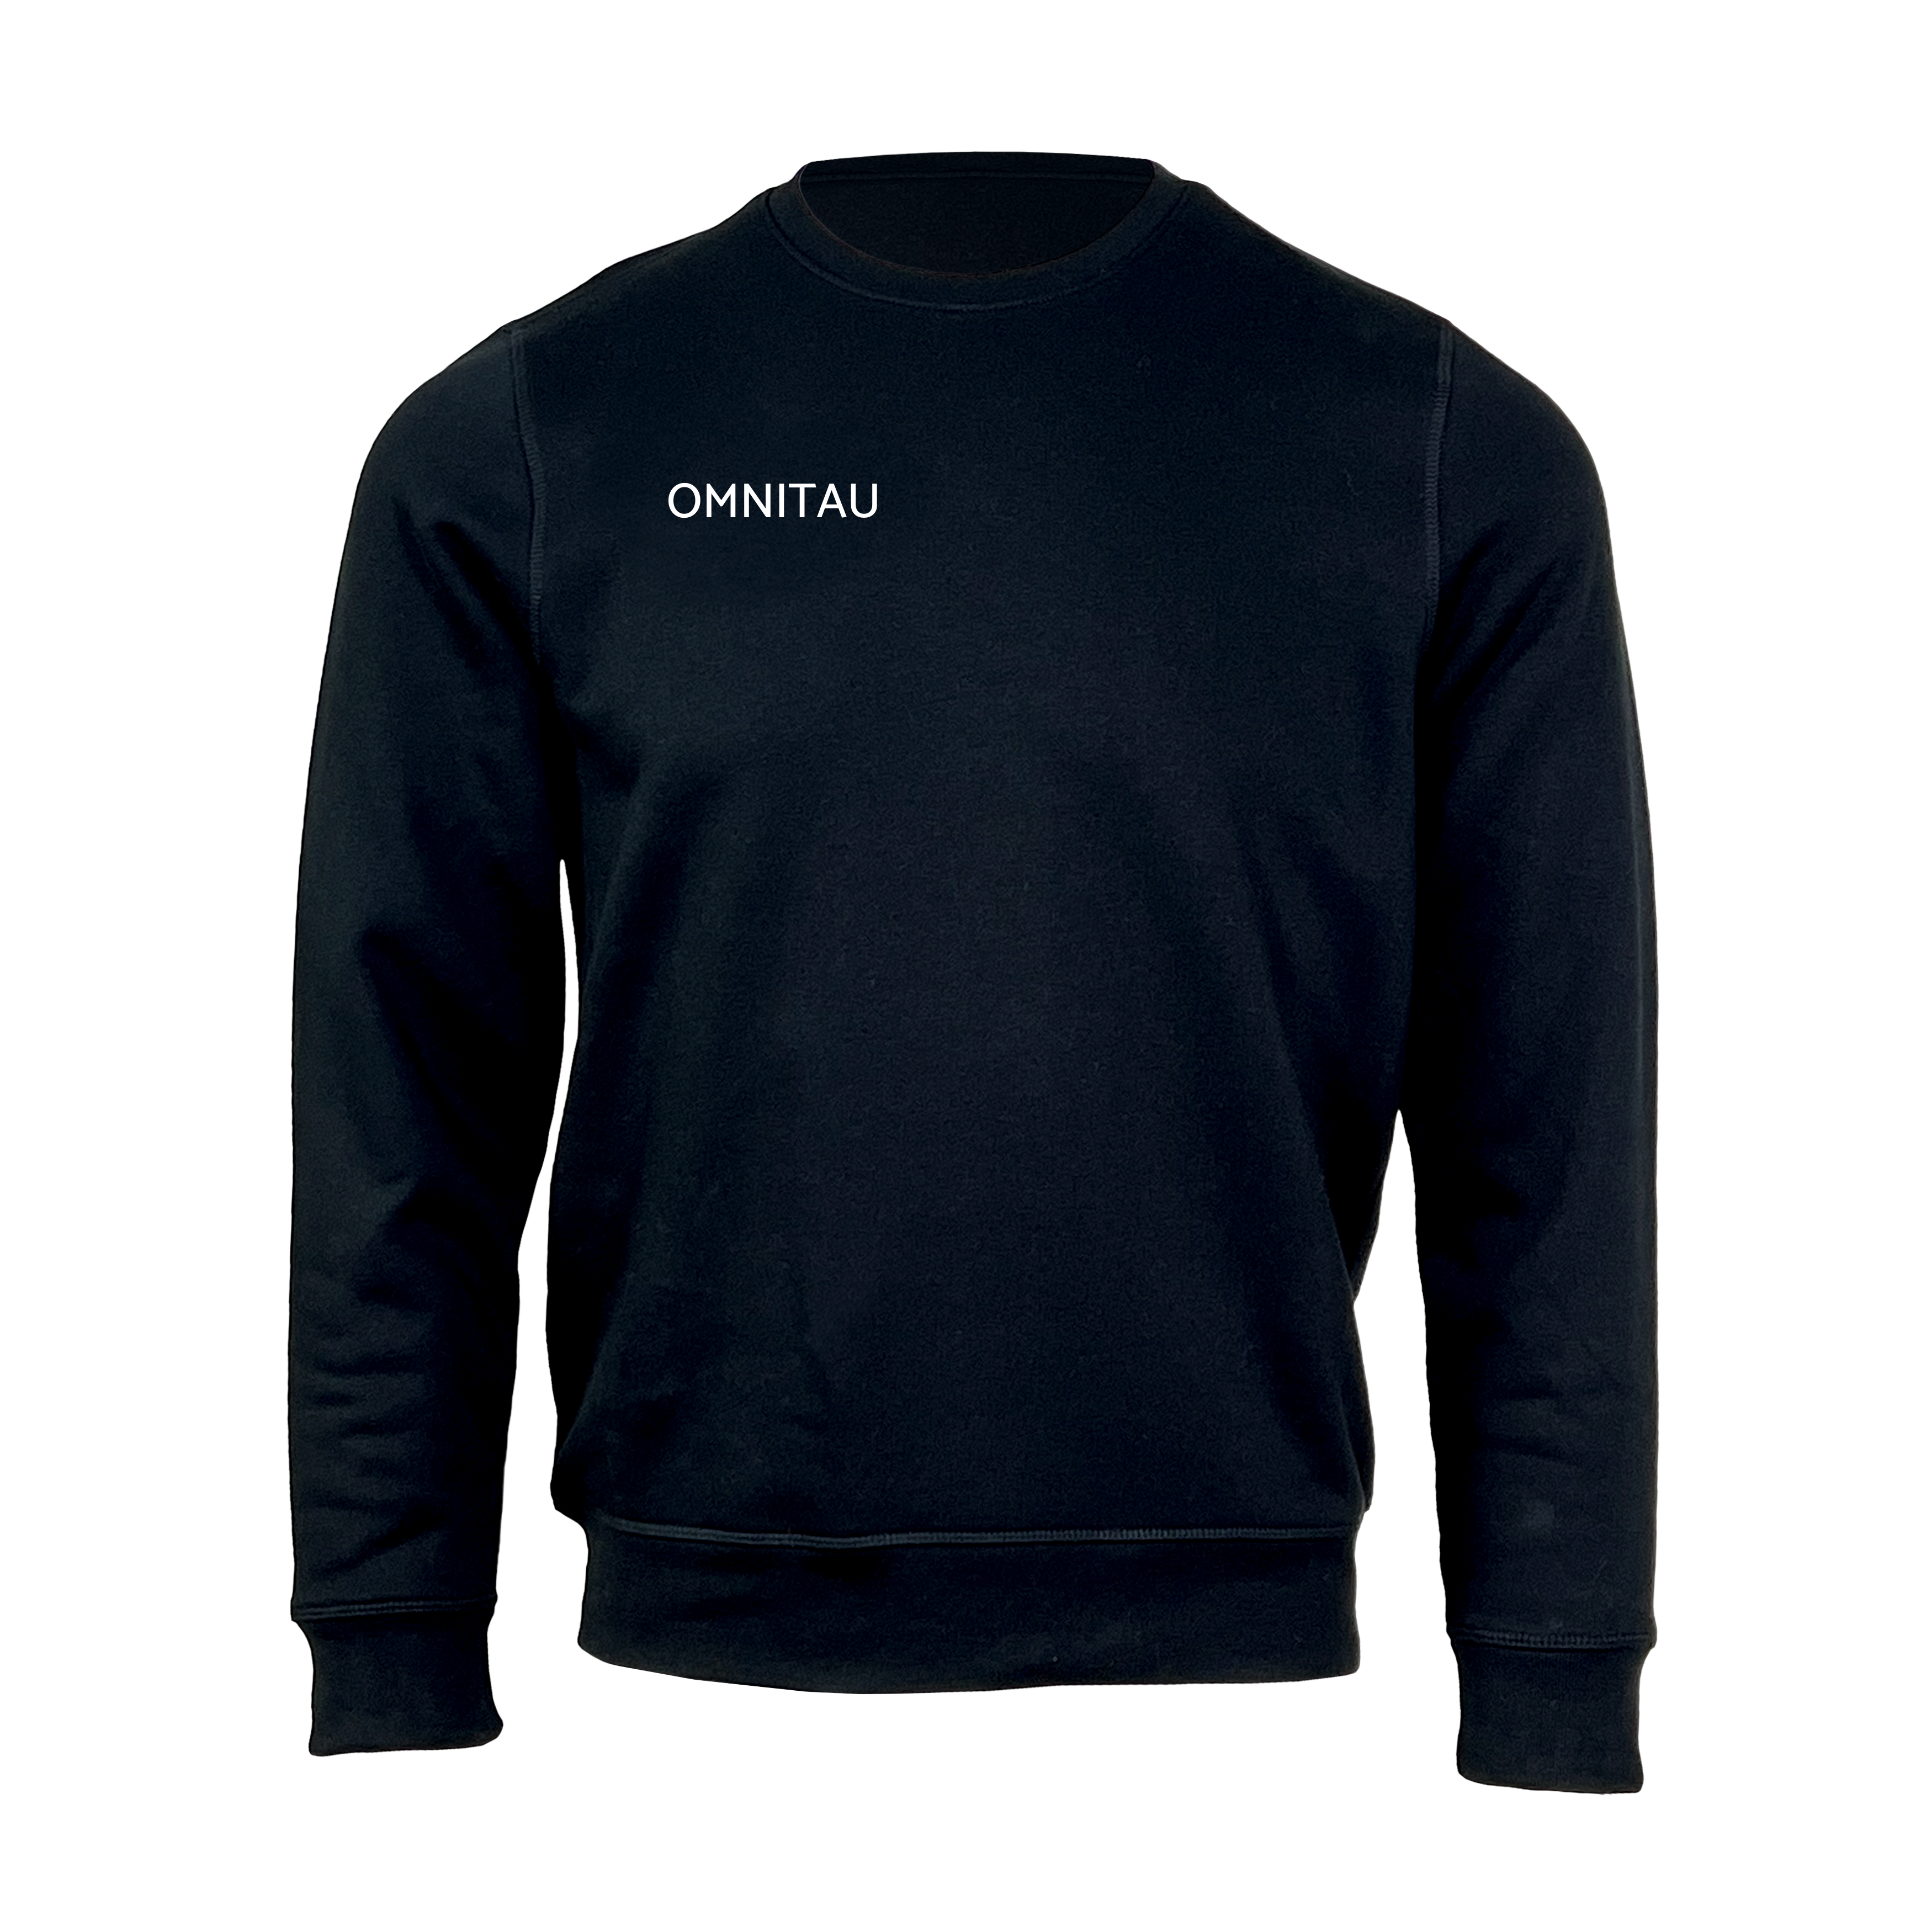 Omnitau Kid's Team Sports Organic Cotton Sweatshirt - Black